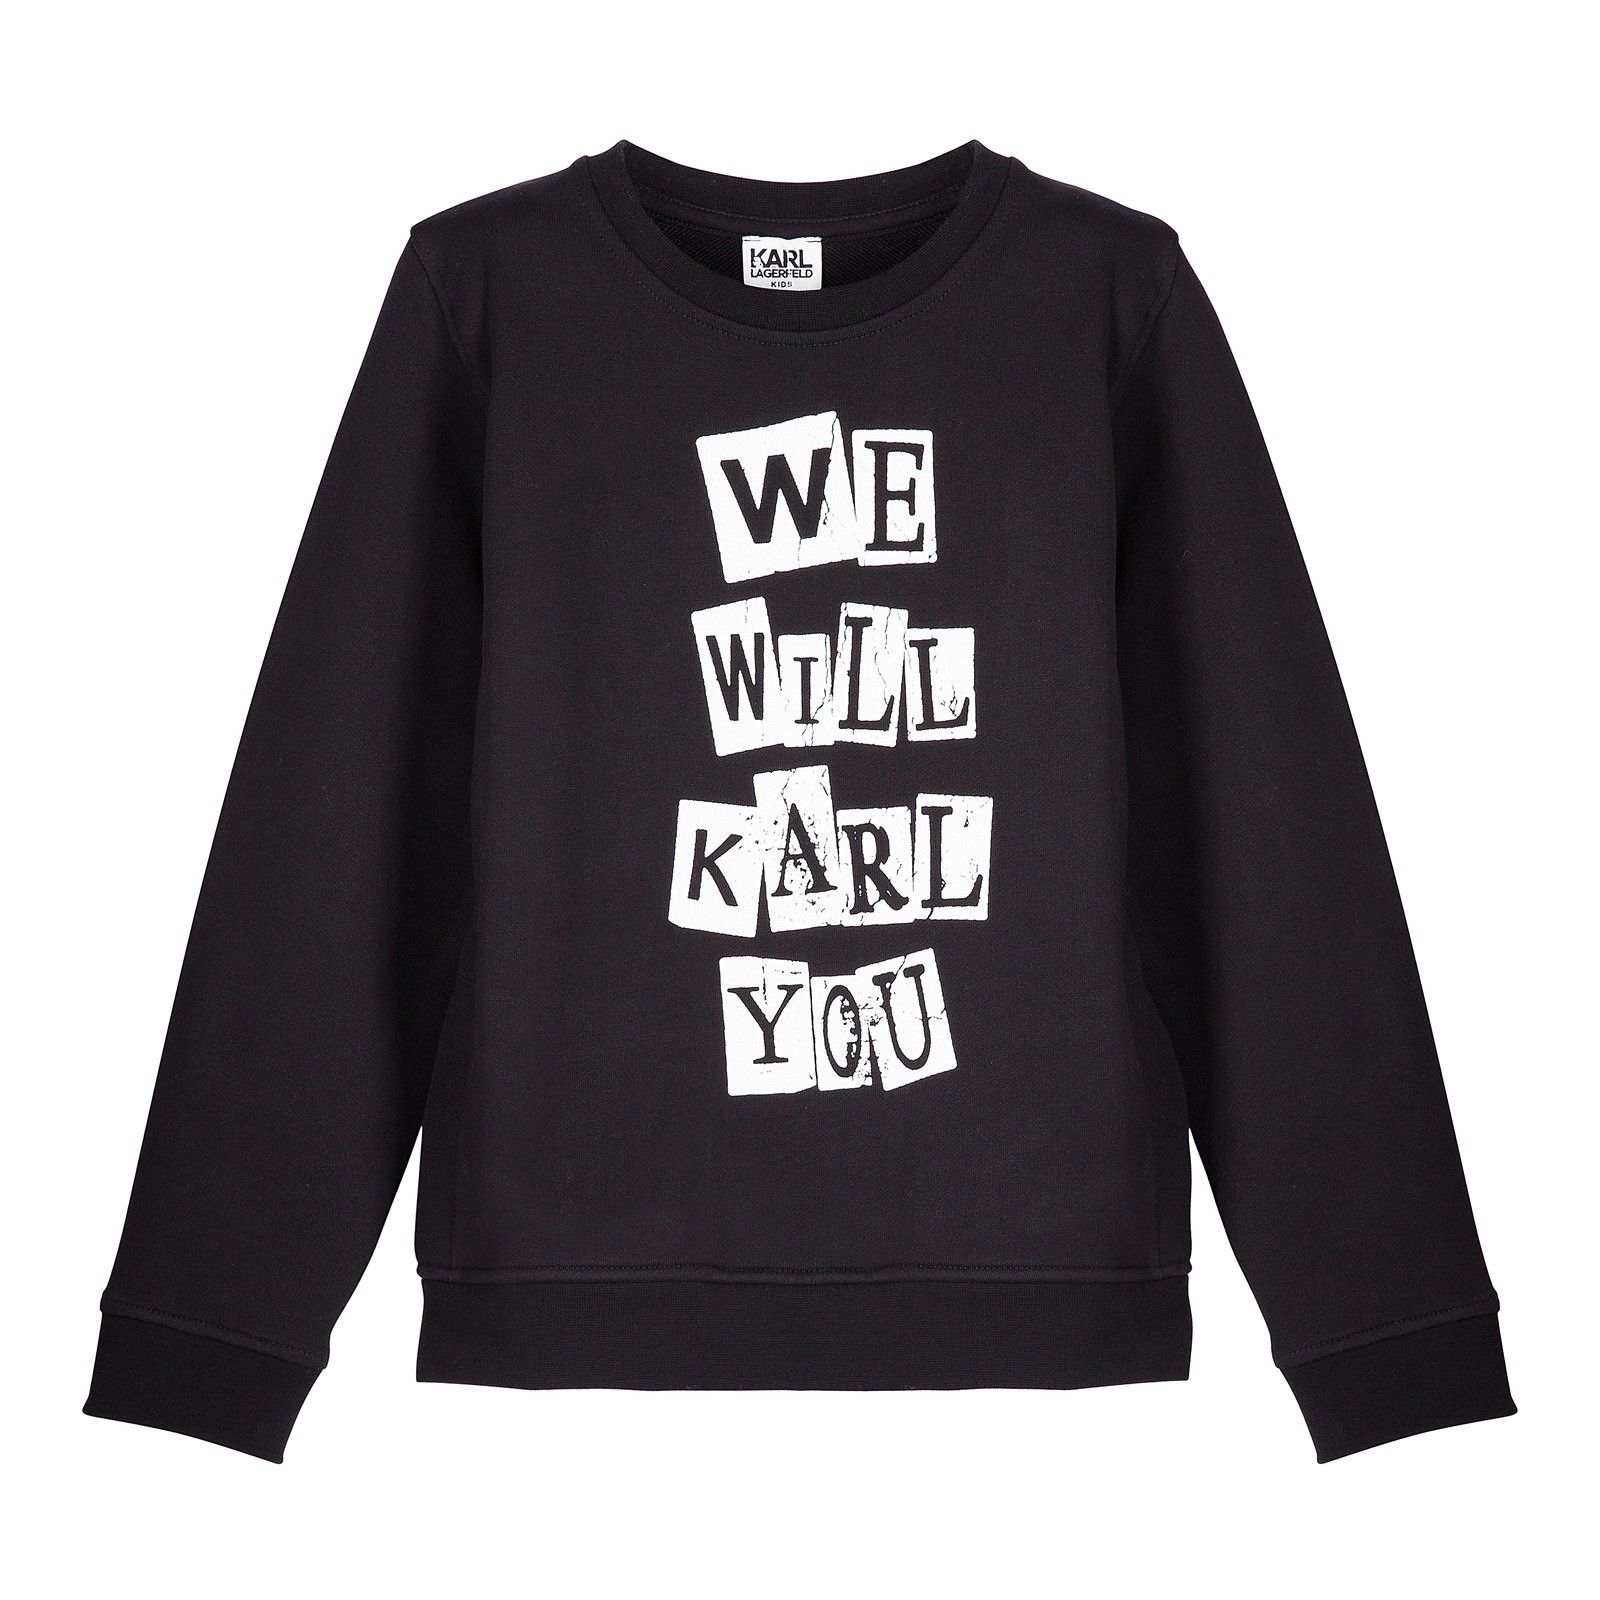 Boys Black Cotton Sweatshirt With 'We Will Karl You' Print - CÉMAROSE | Children's Fashion Store